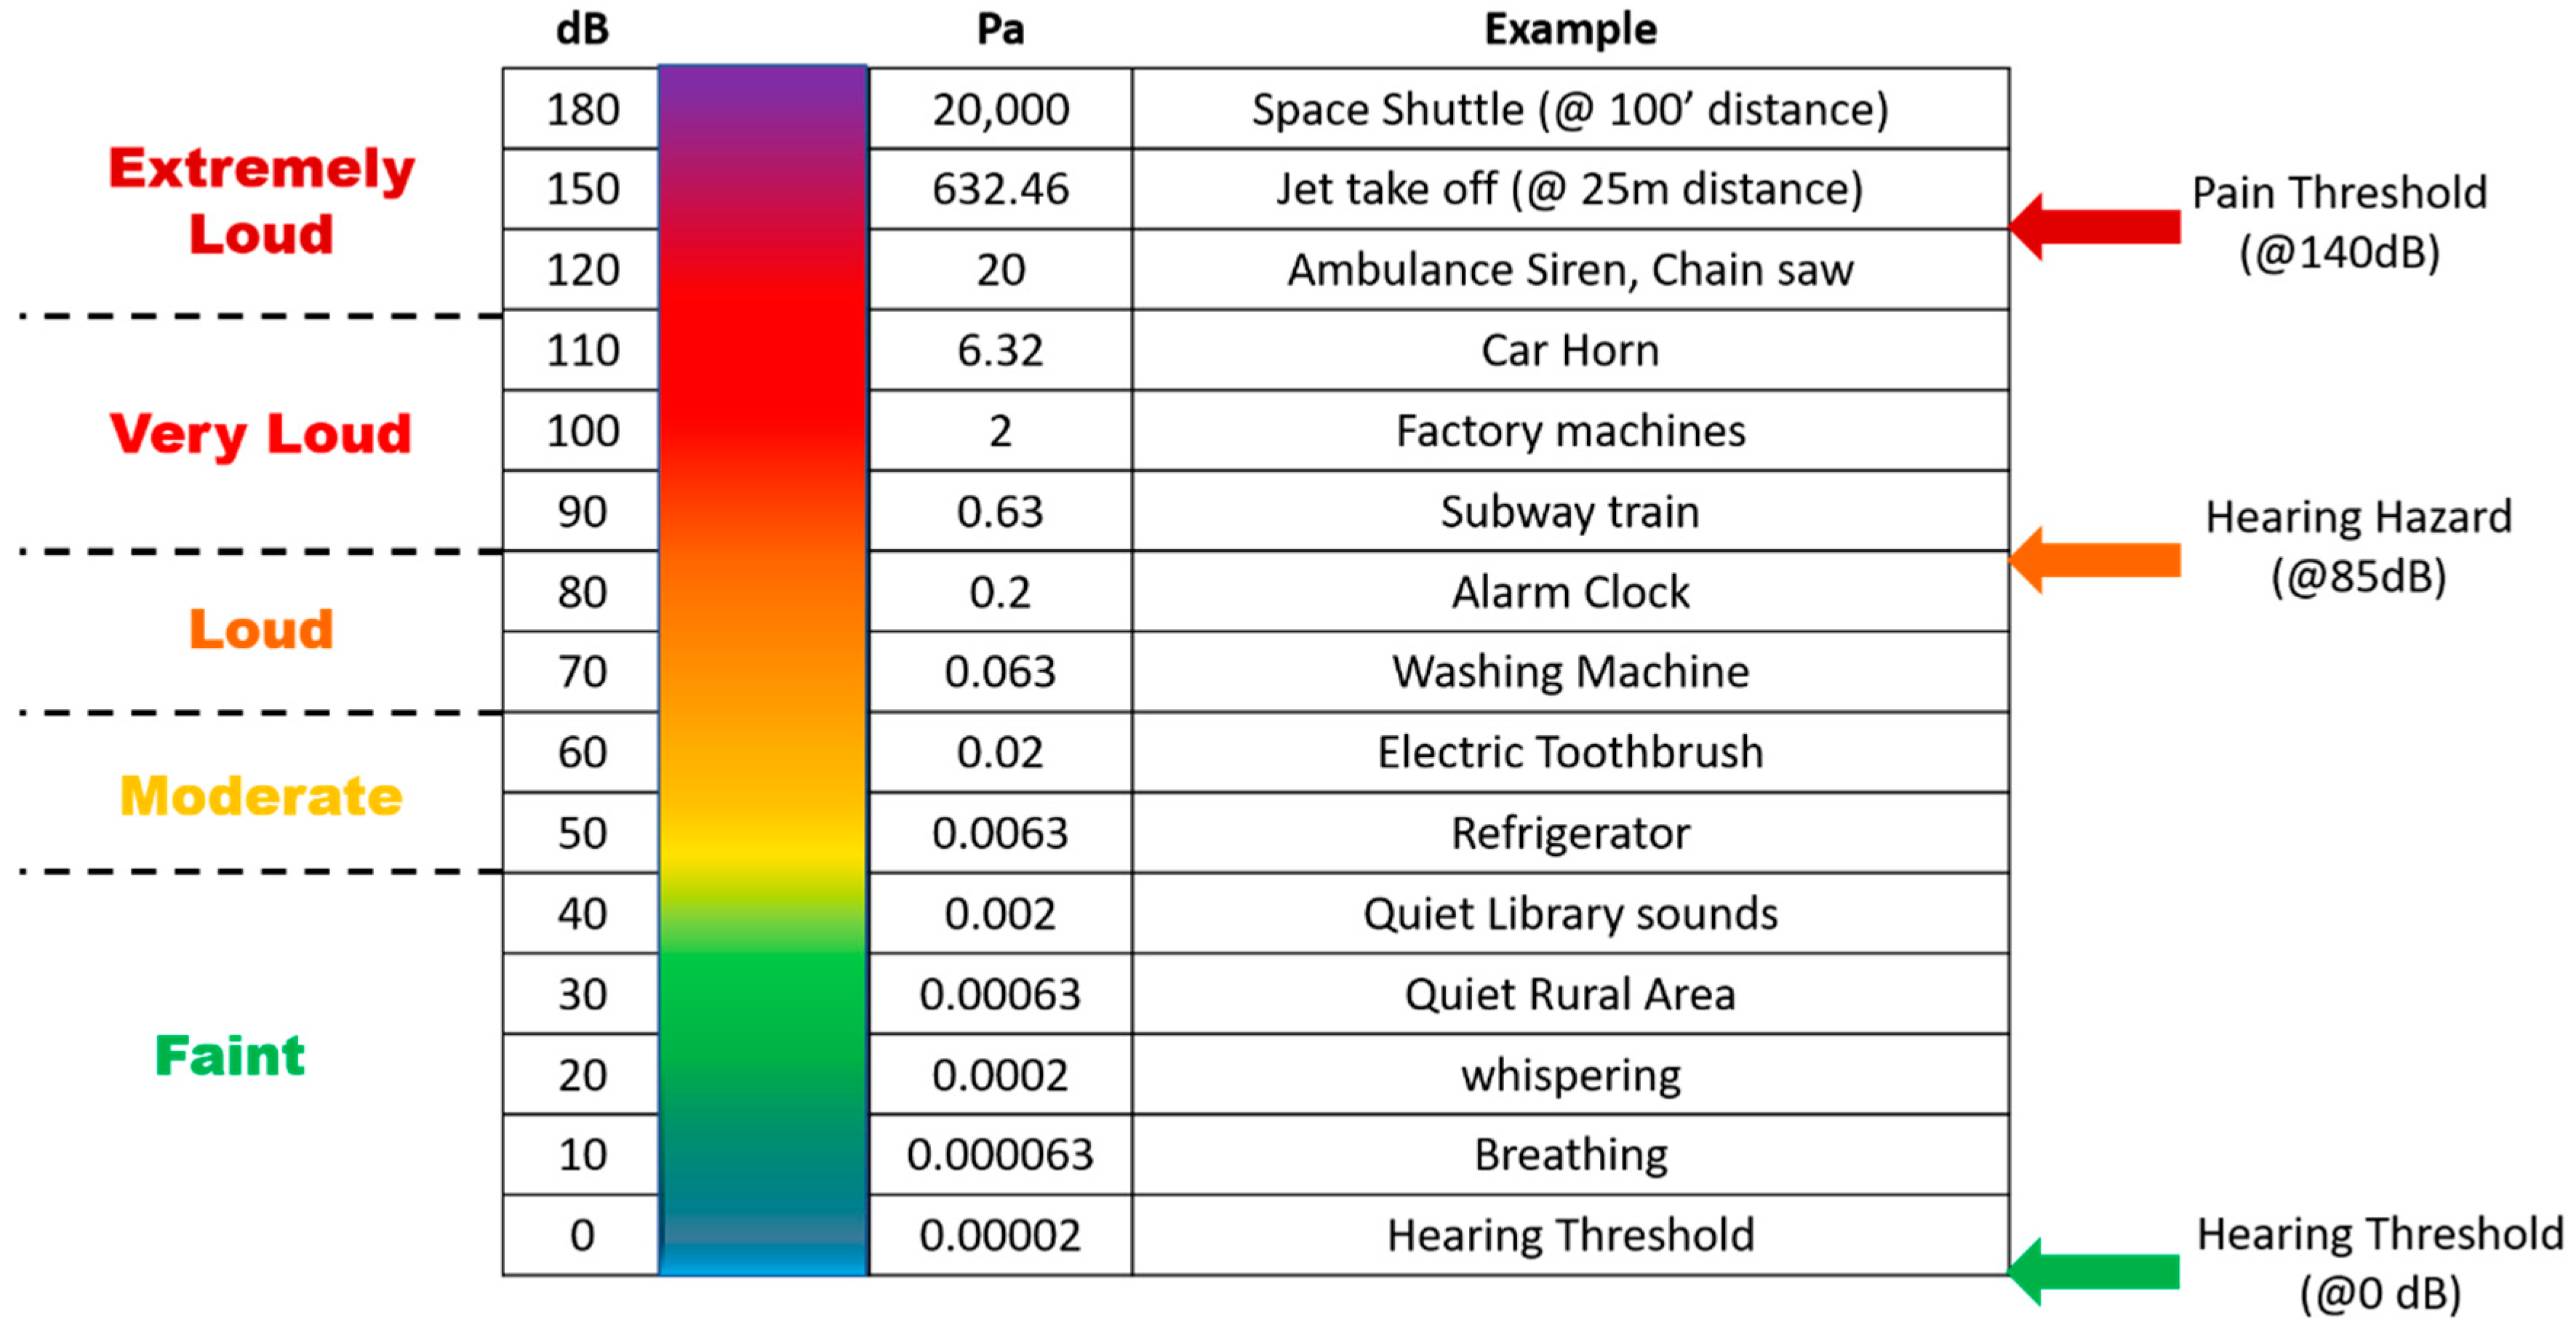 decibel scale examples